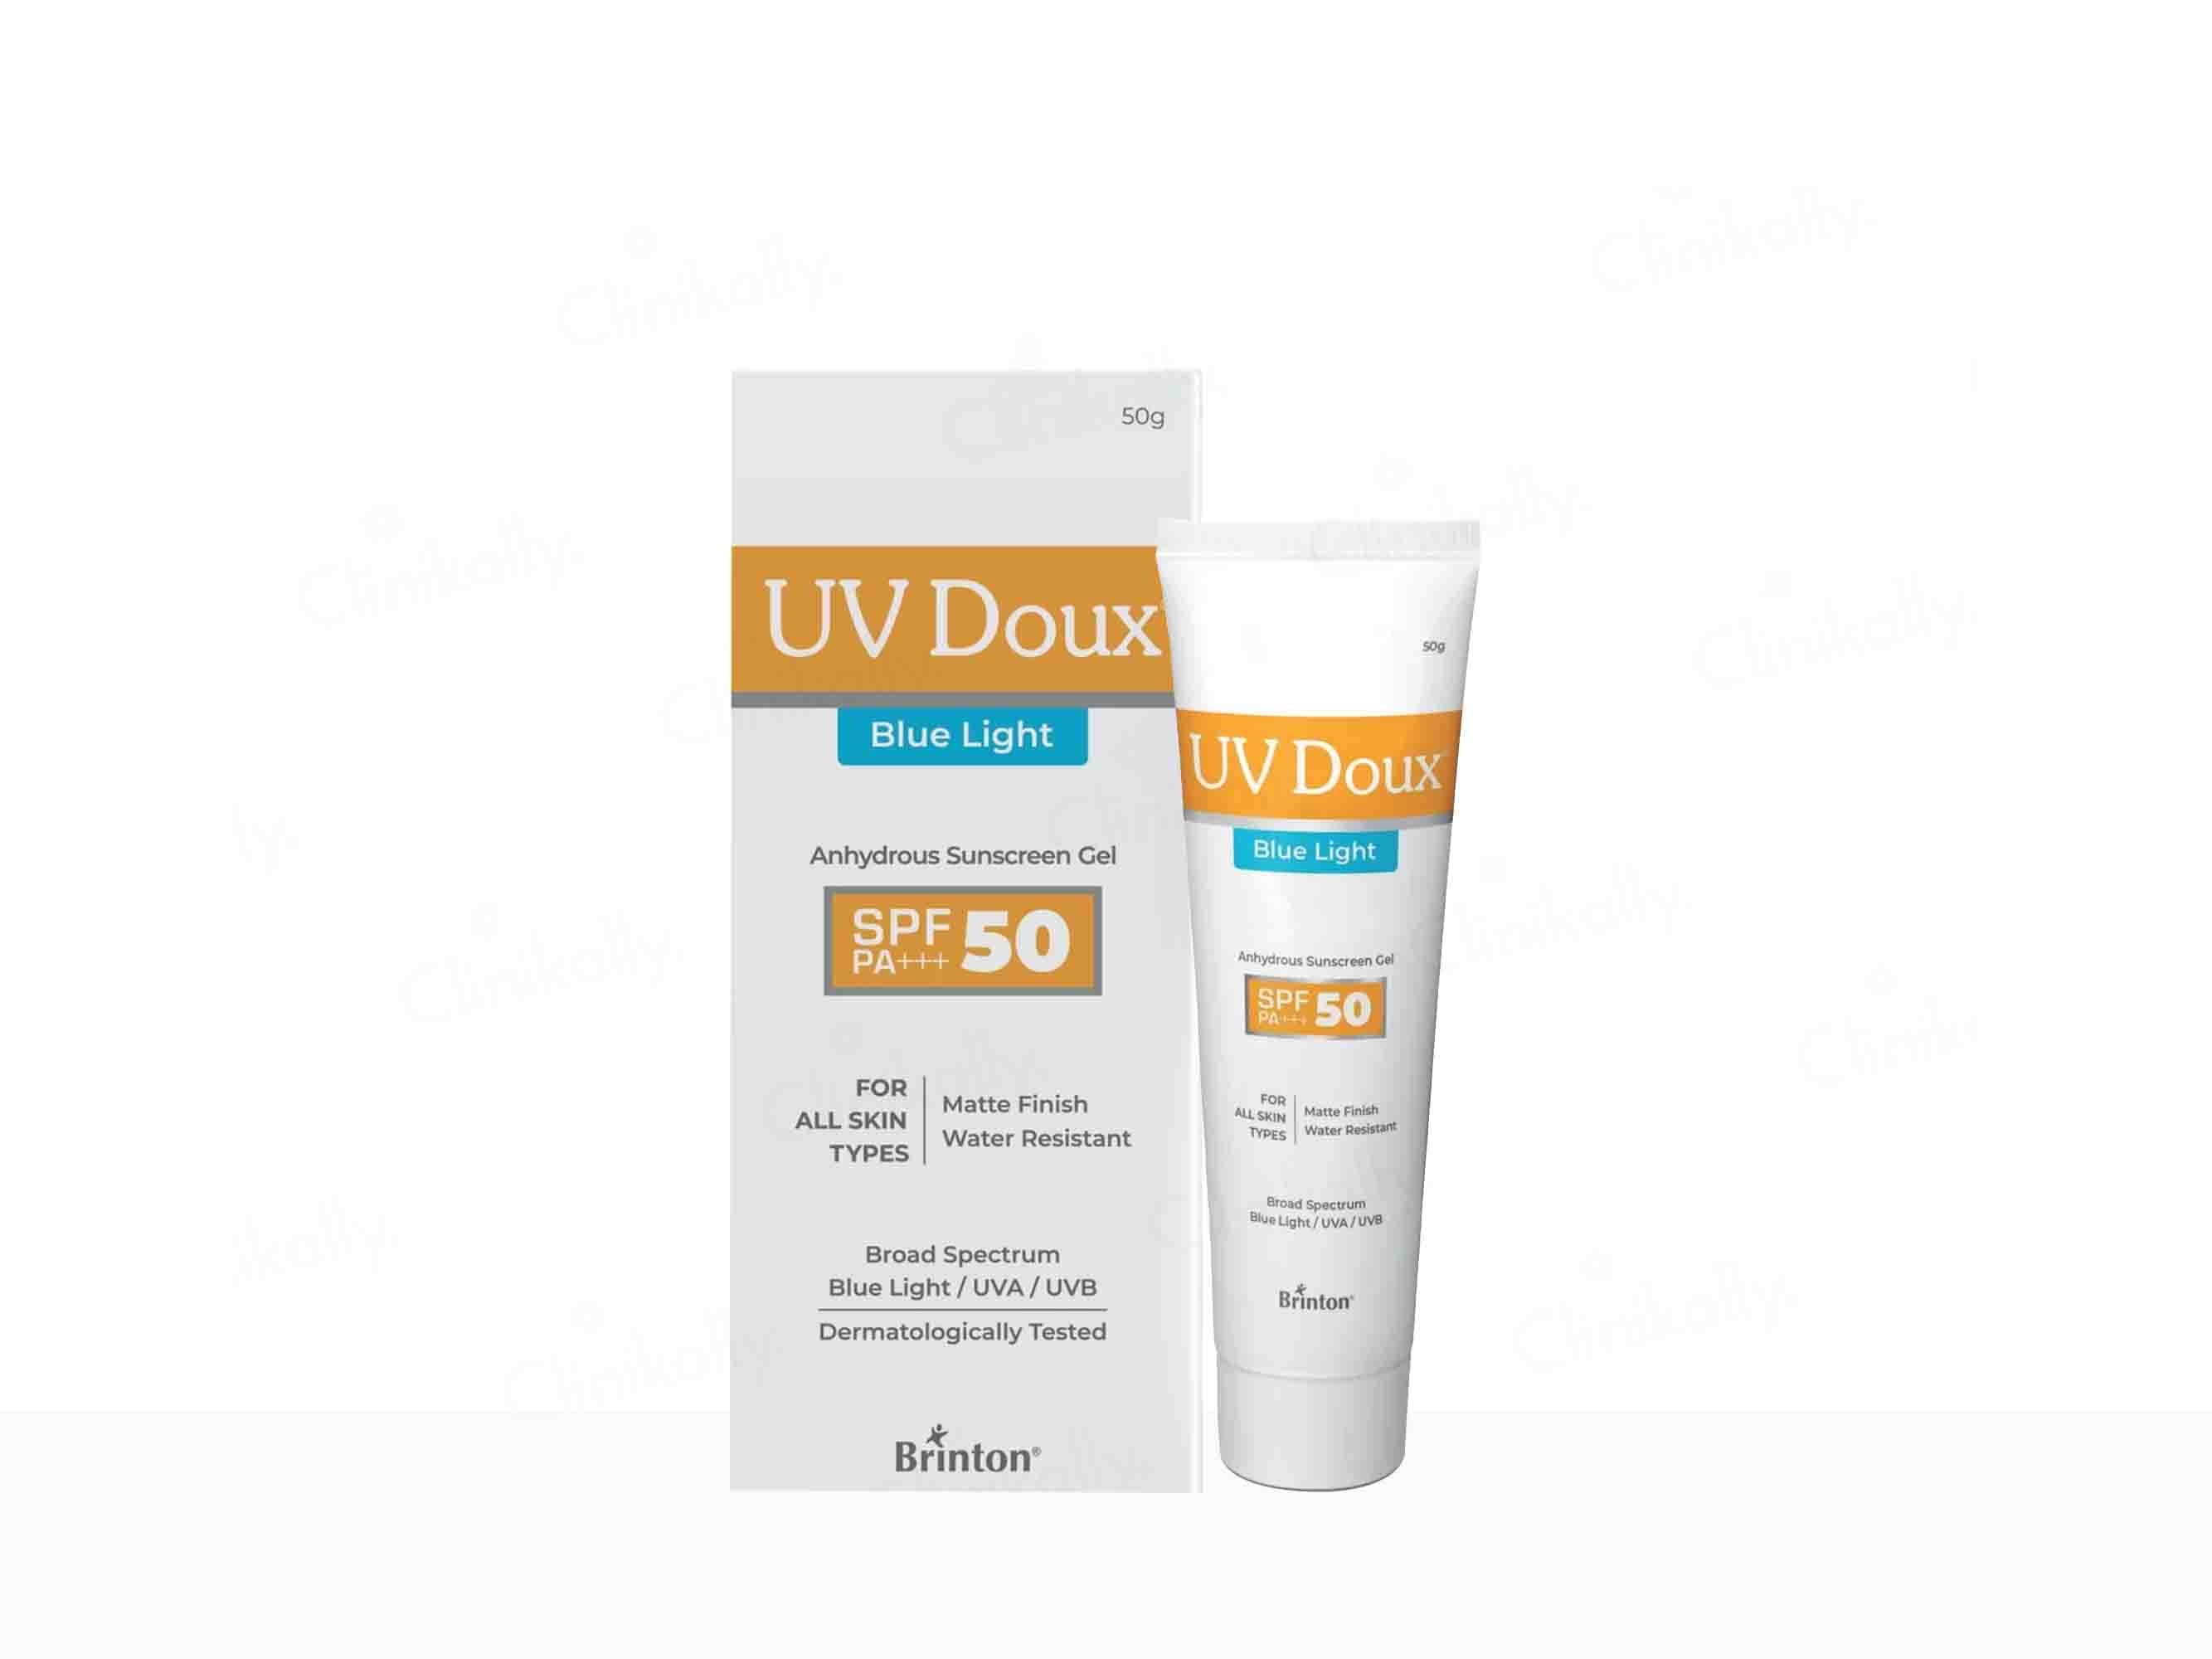 UV Doux Blue Light Anhydrous Sunscreen Gel SPF 50 PA+++